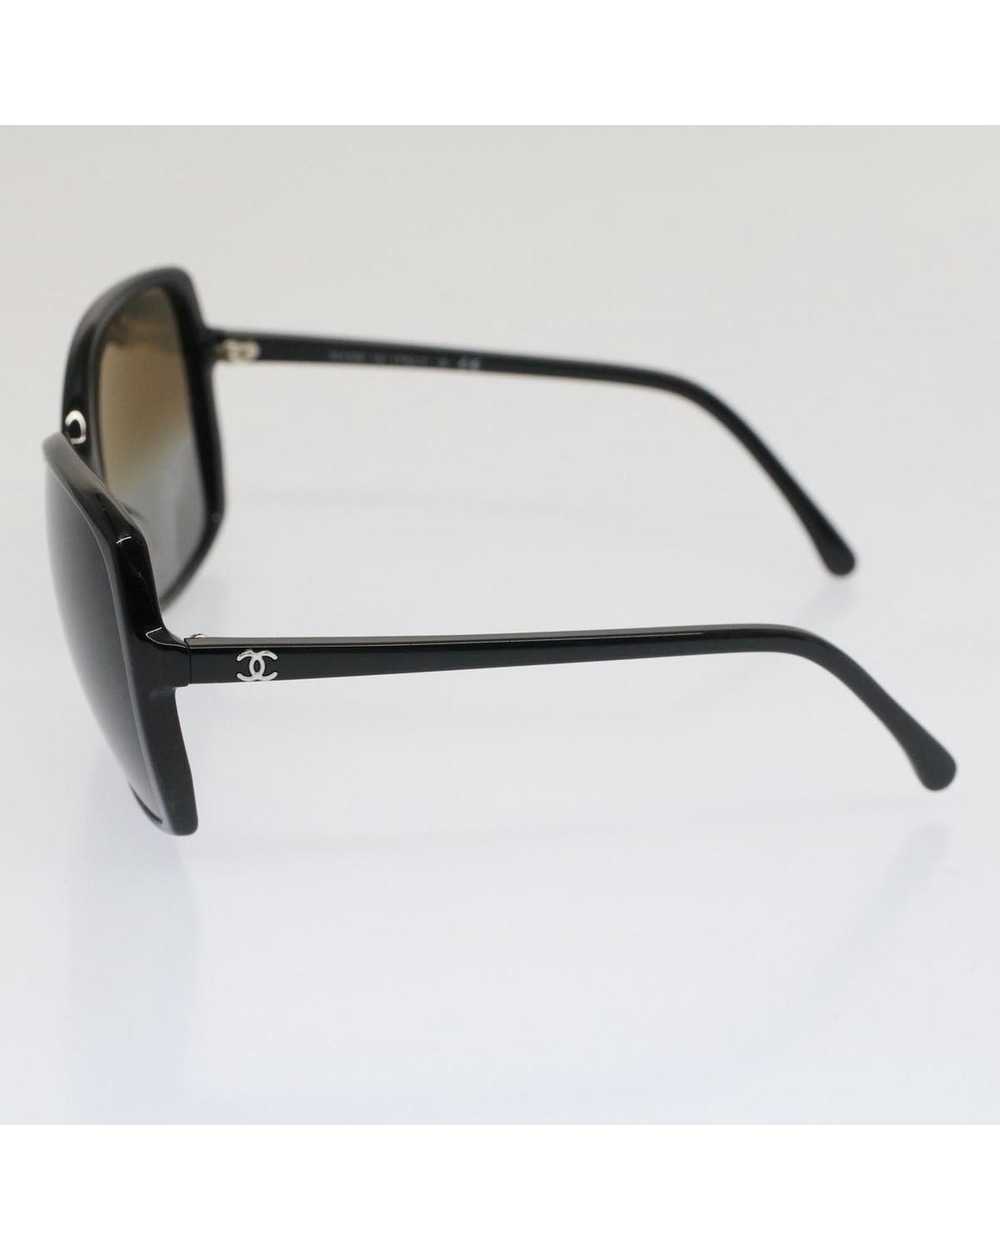 Chanel Black Plastic Sunglasses with CC Logo - image 5